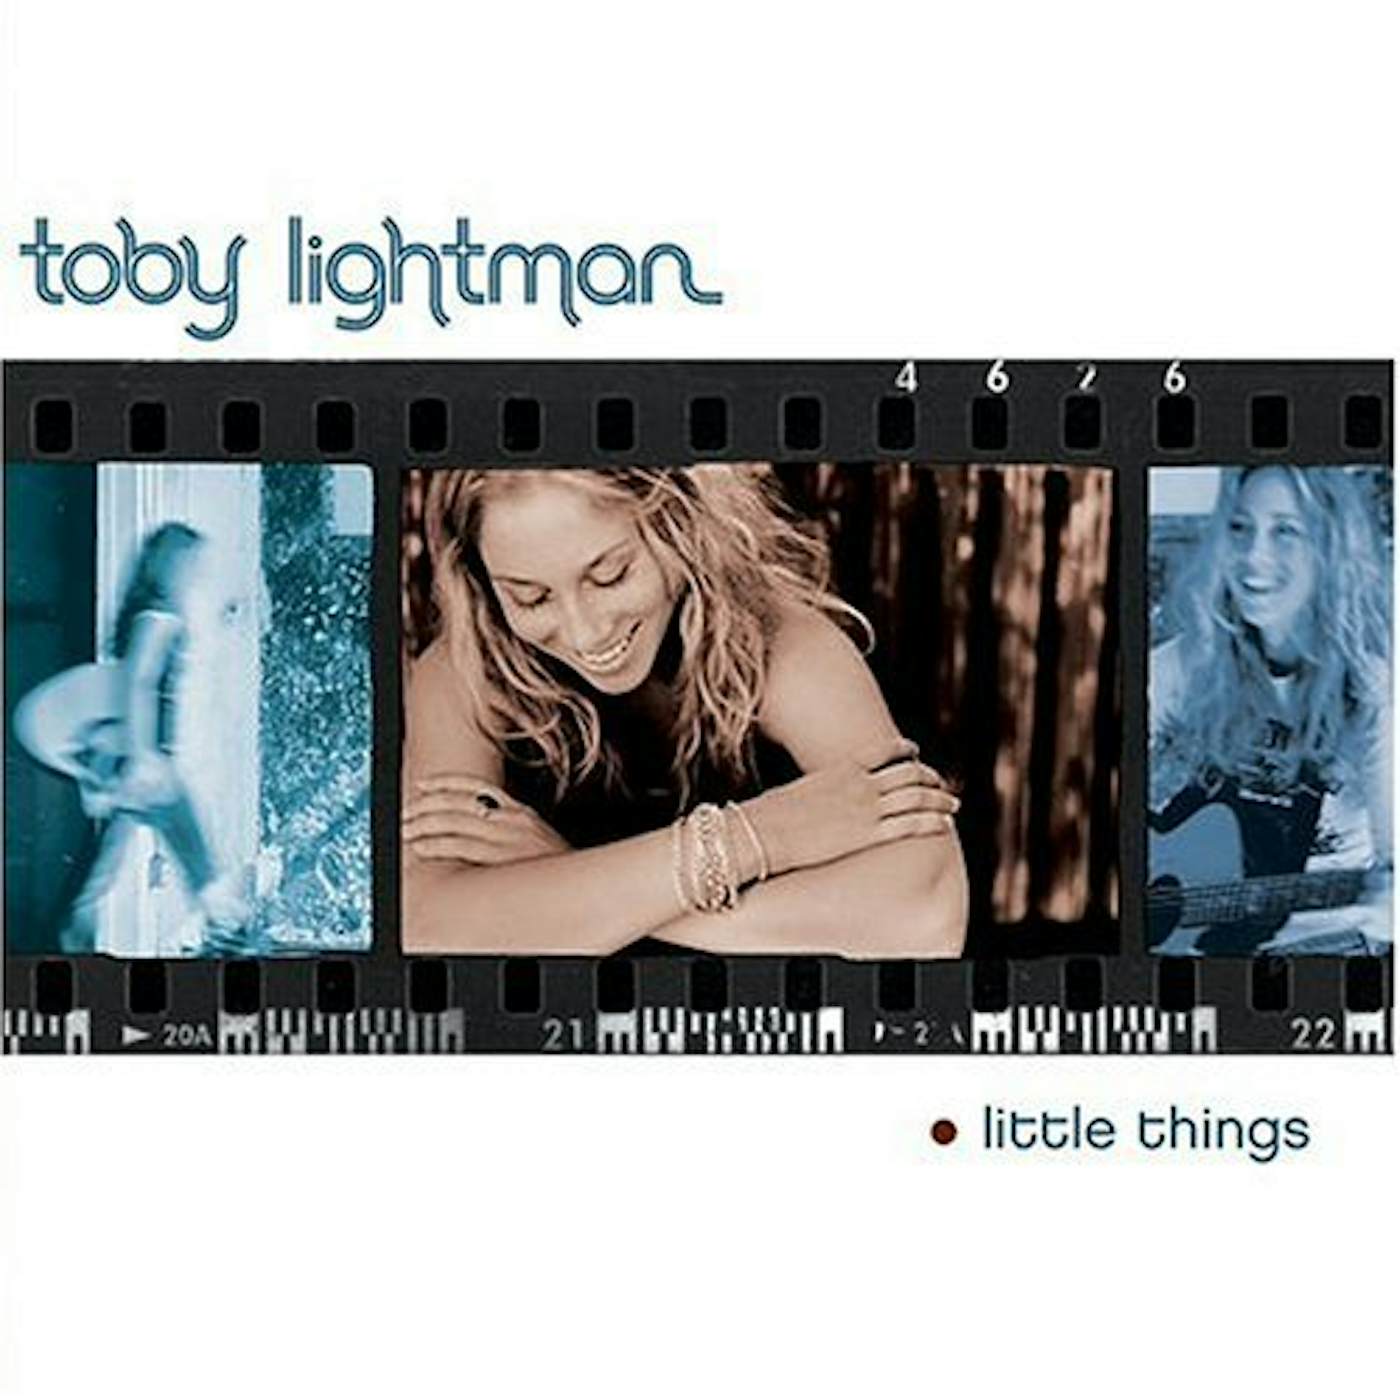 Toby Lightman LITTLE THINGS CD